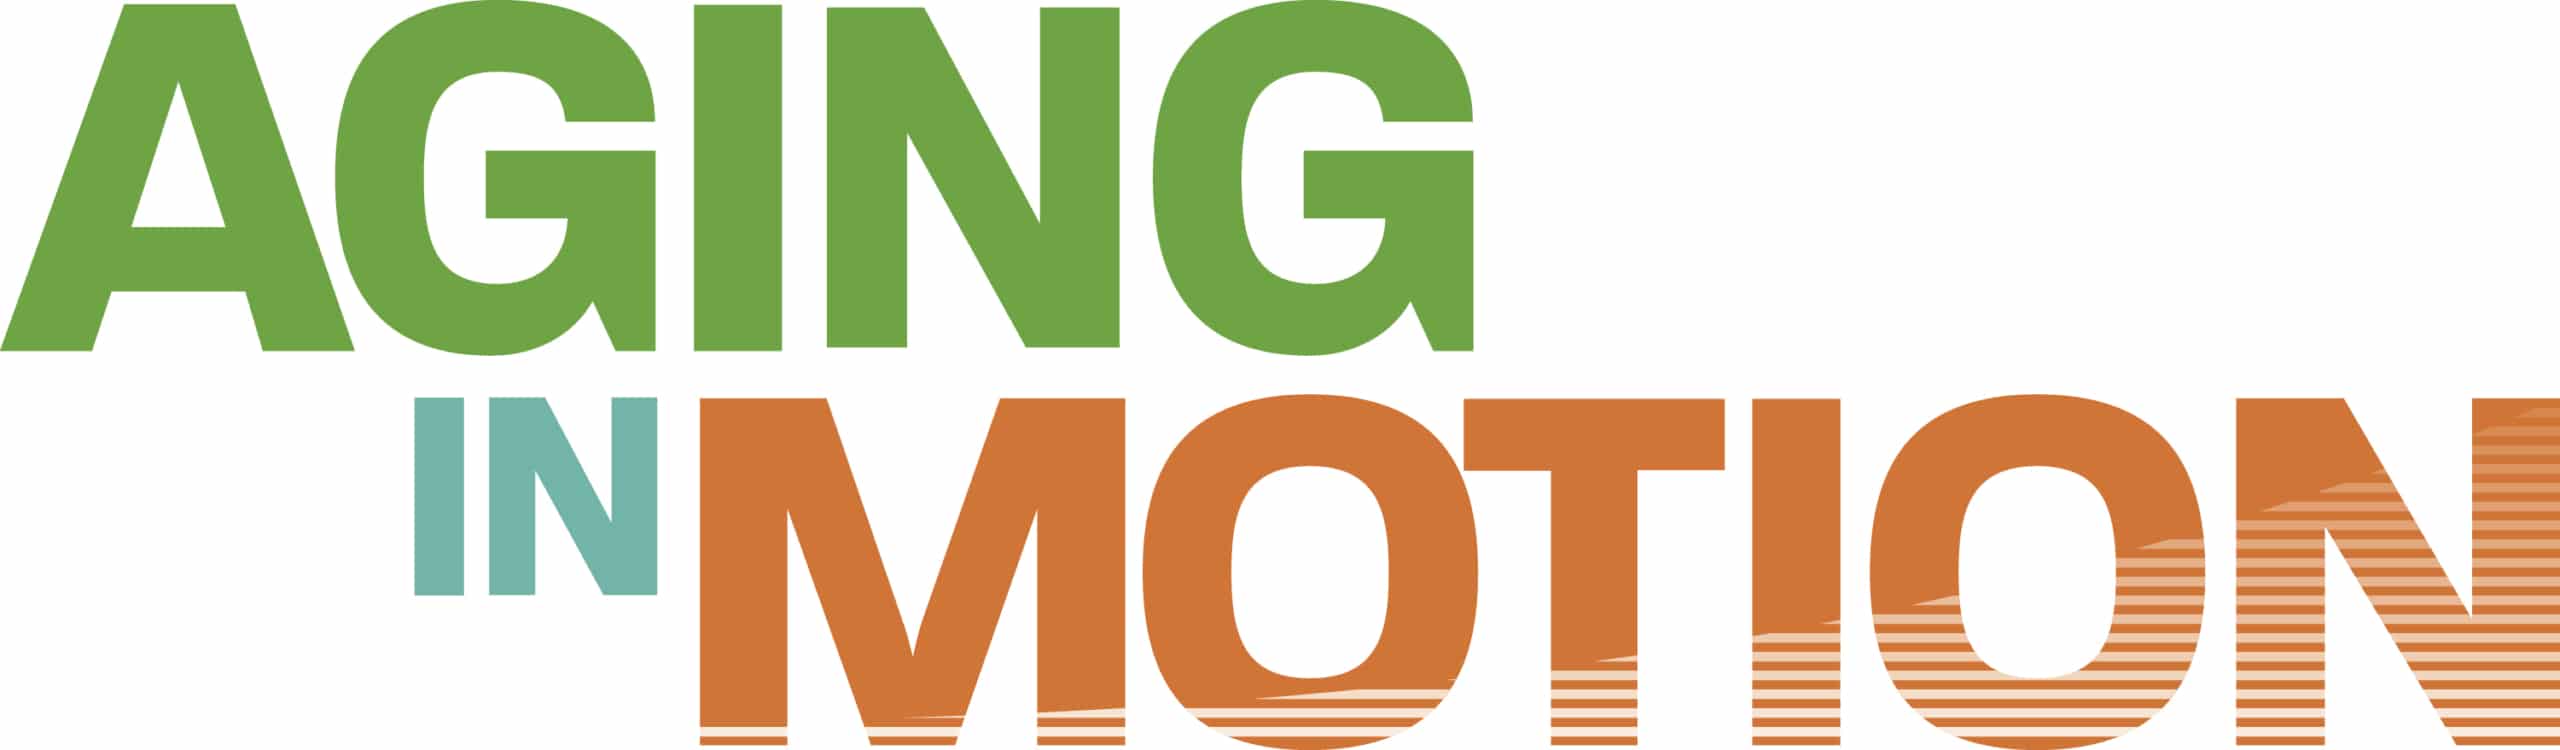 Aging in Motion logo.